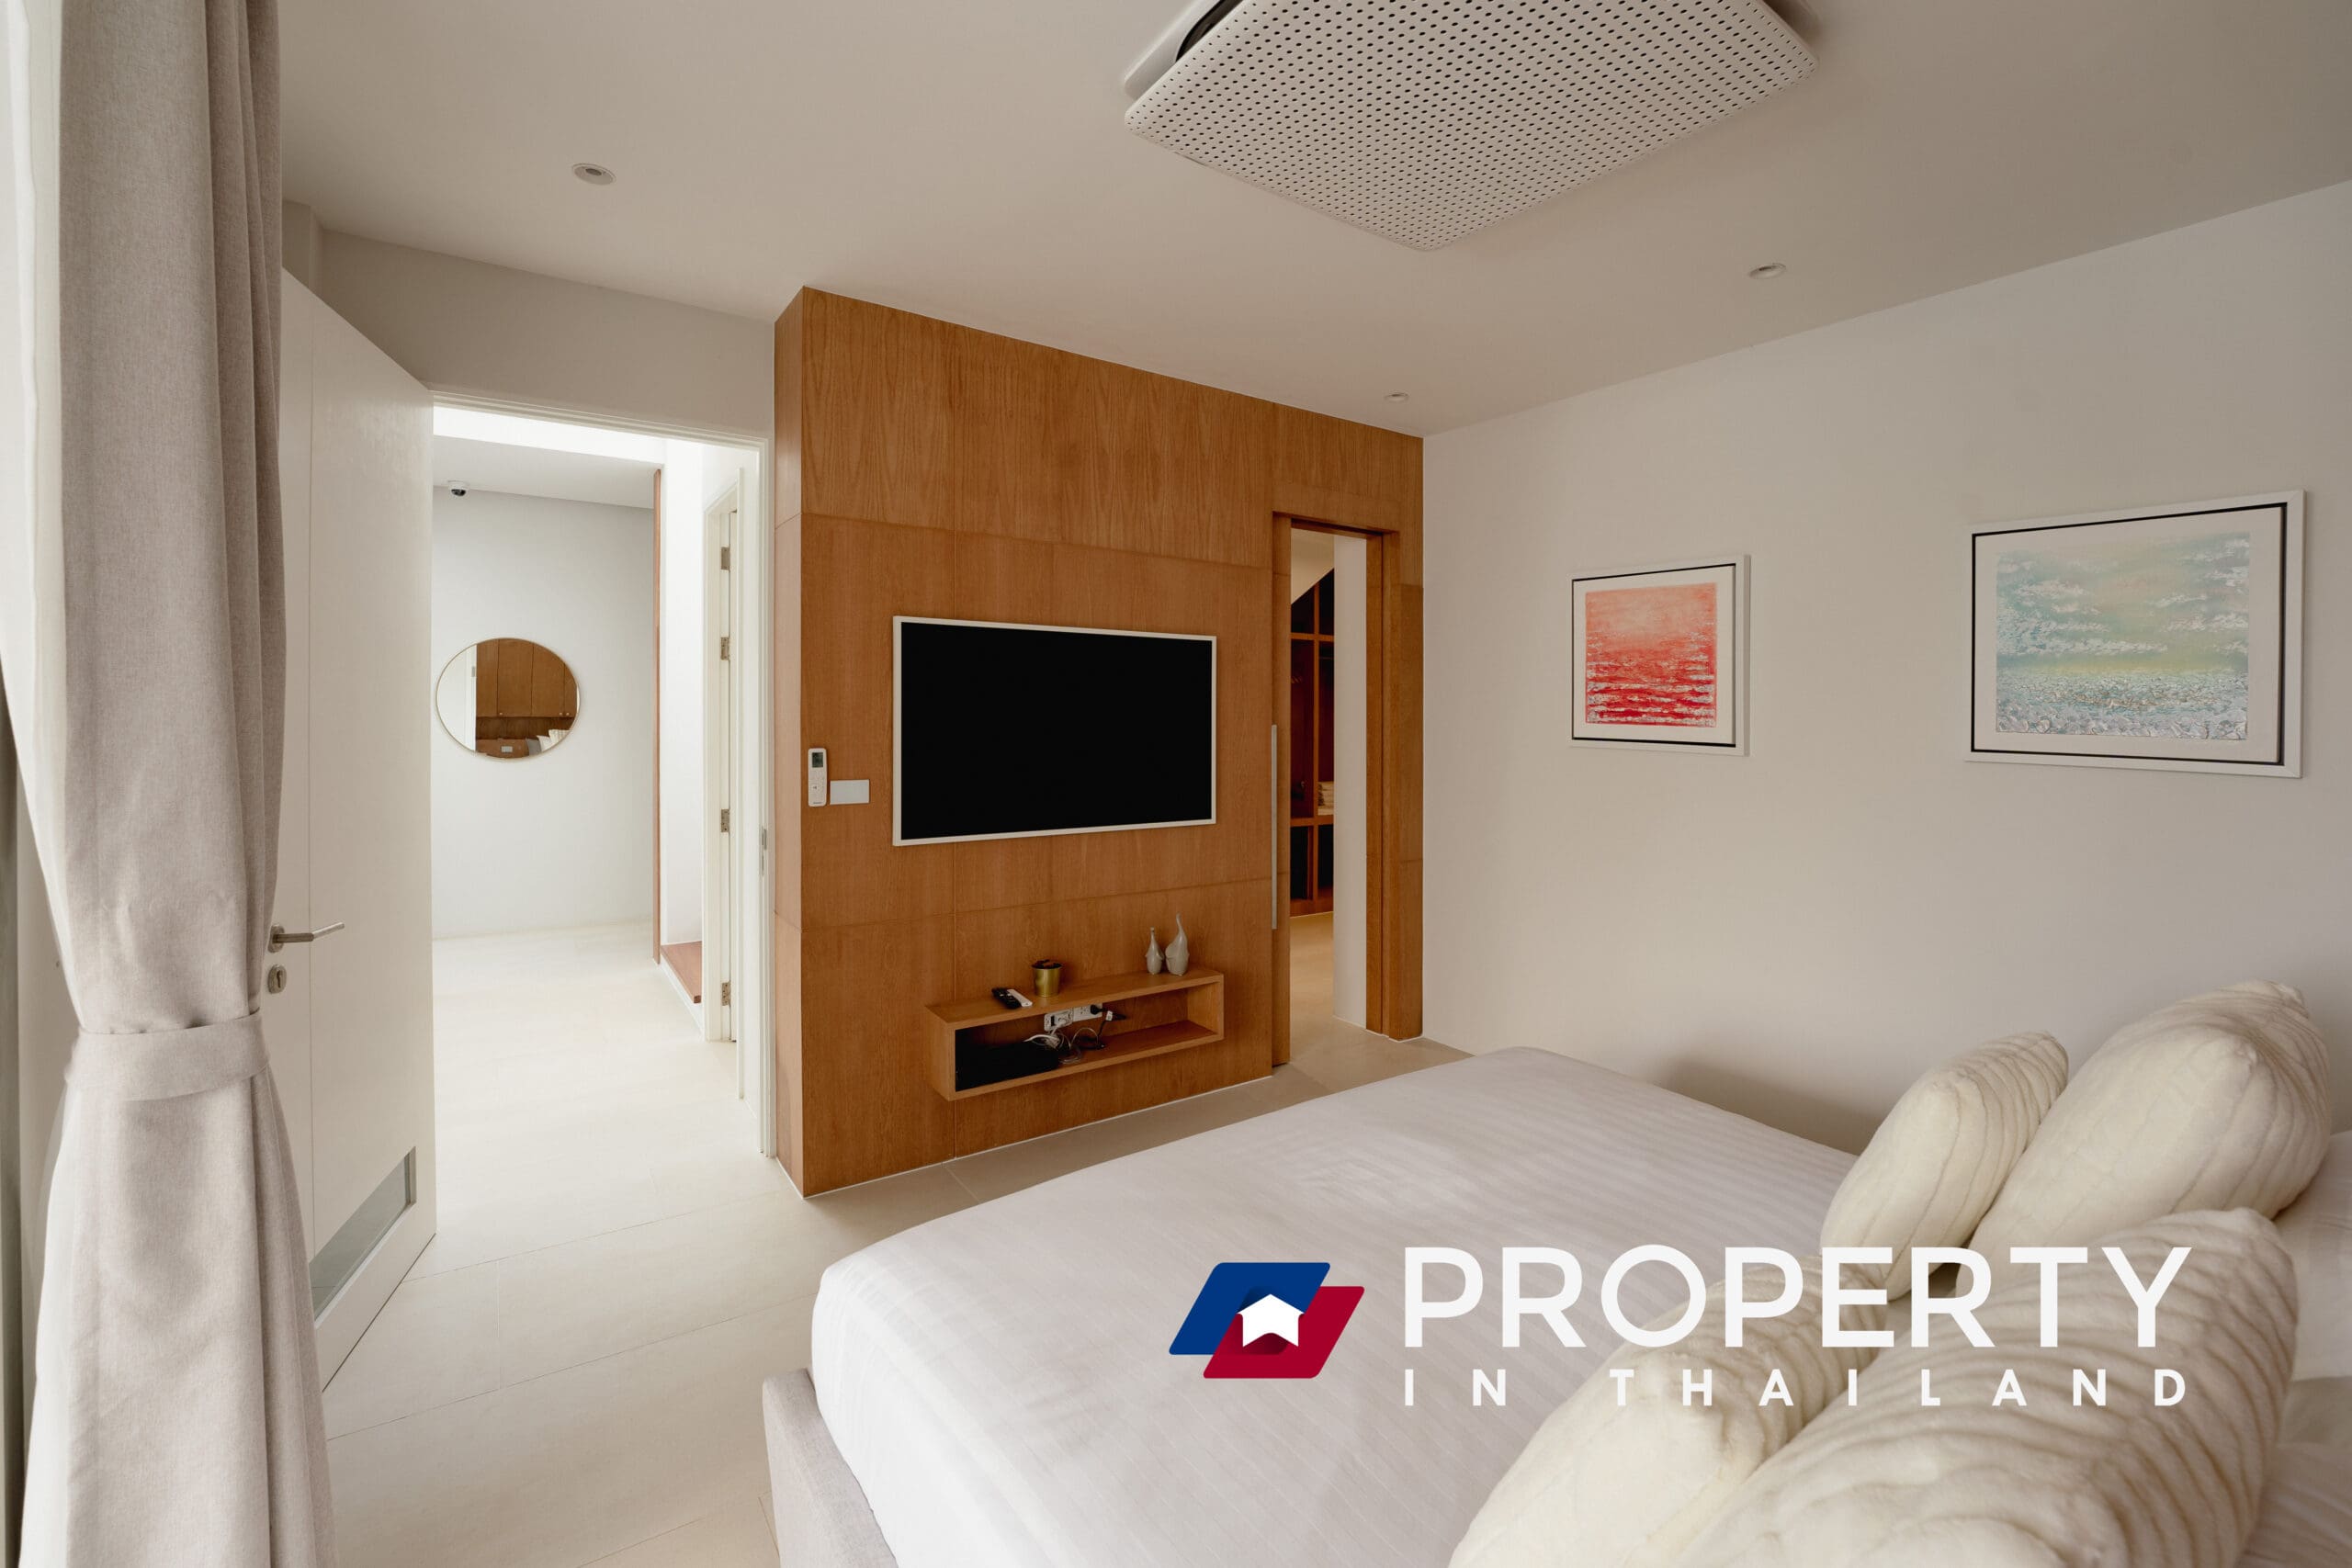 Property-in-thailand_Real-Estate-lisitng-for-sale-Bedroom